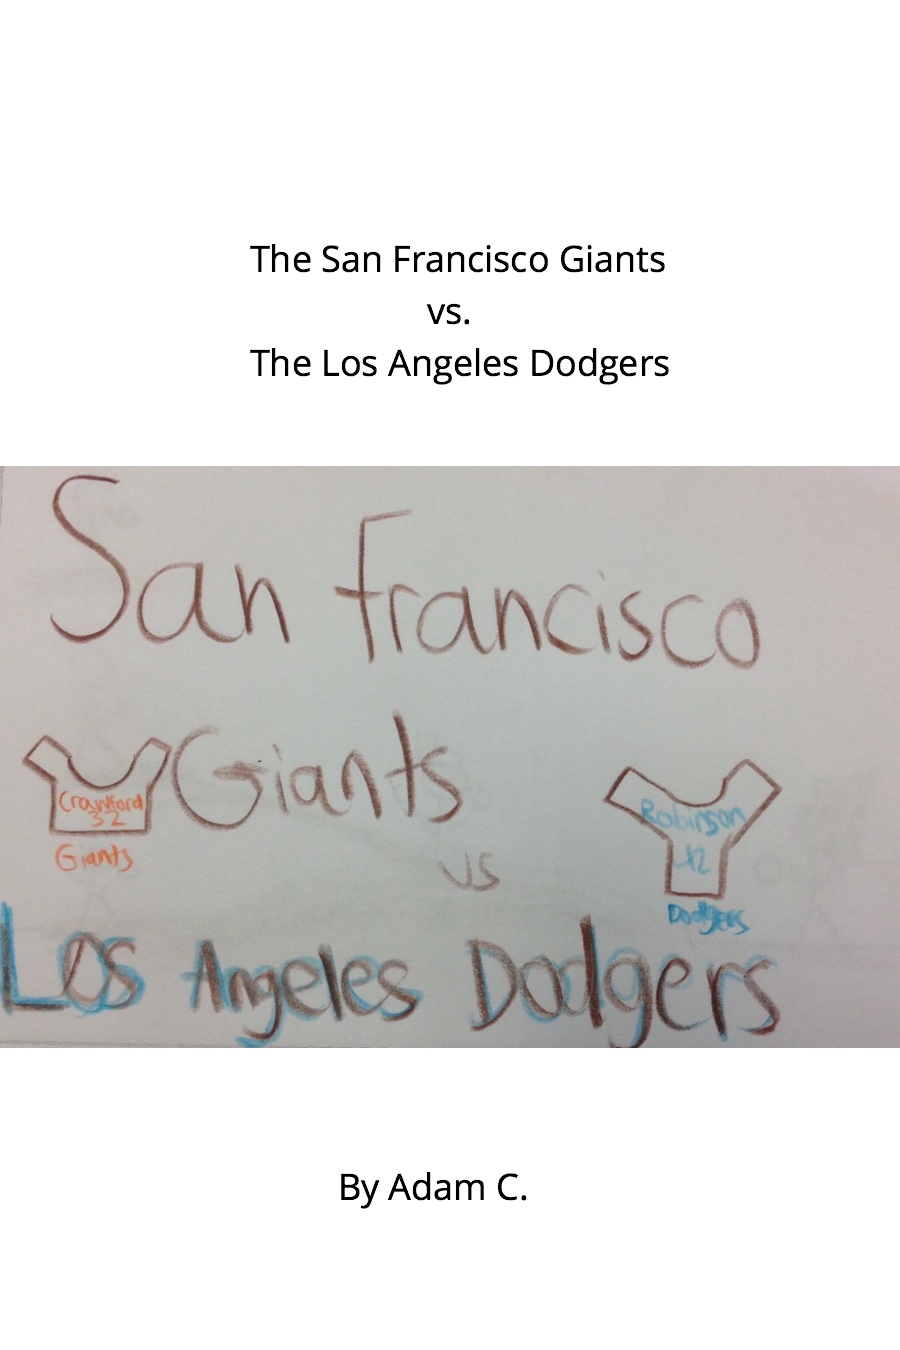 San Francisco Giants vs the Los Angeles Dodgers by Adam C